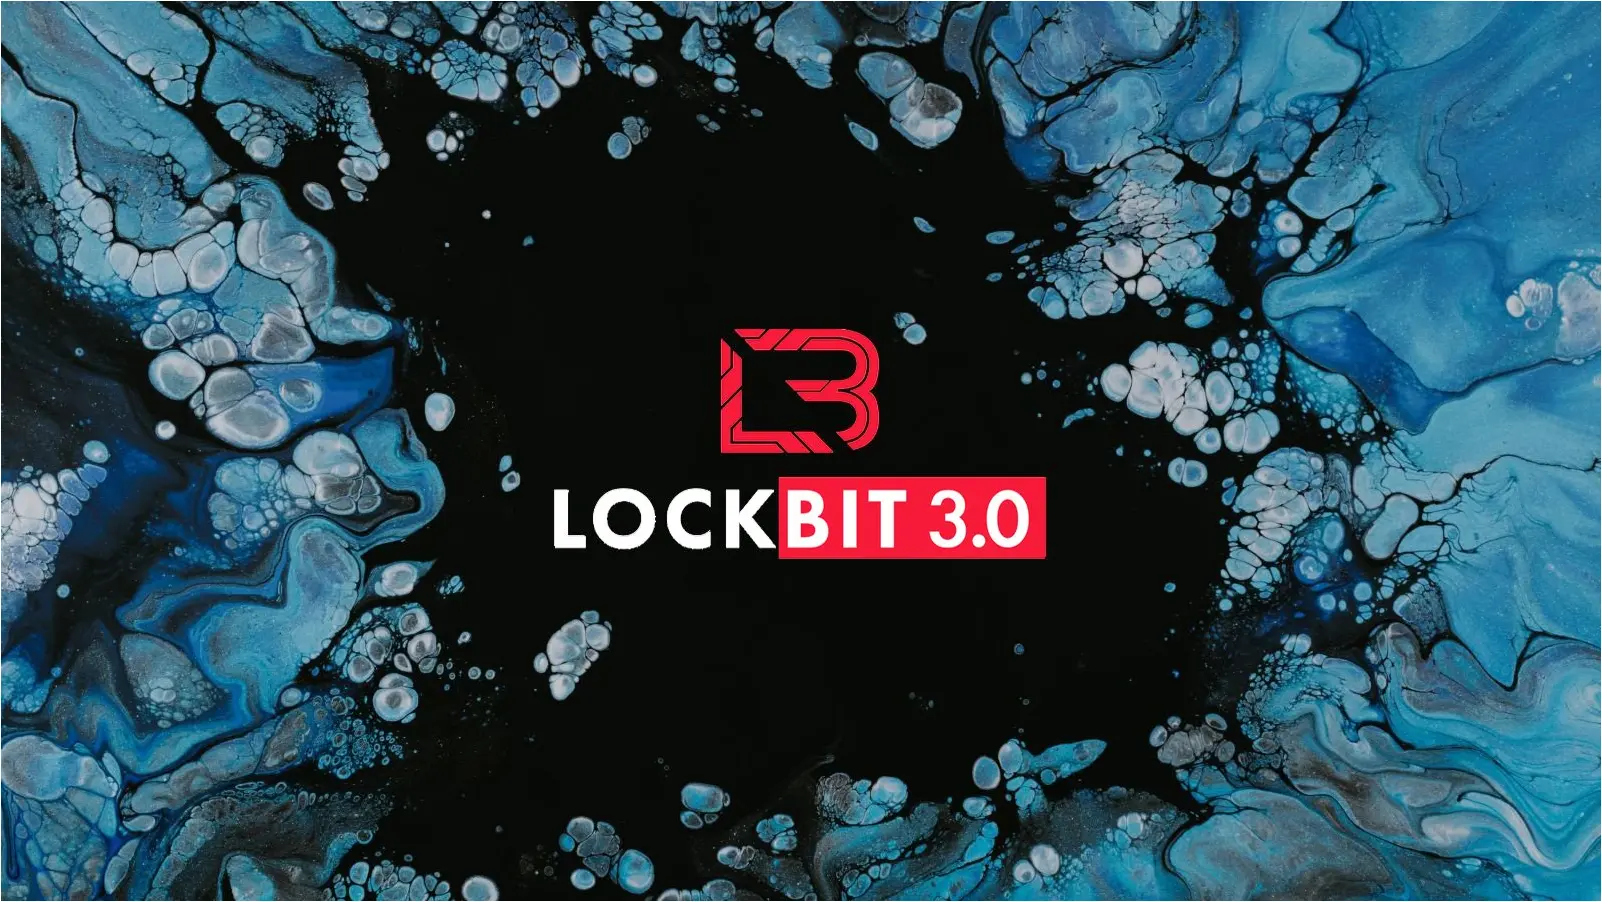 Lockbit 3.0